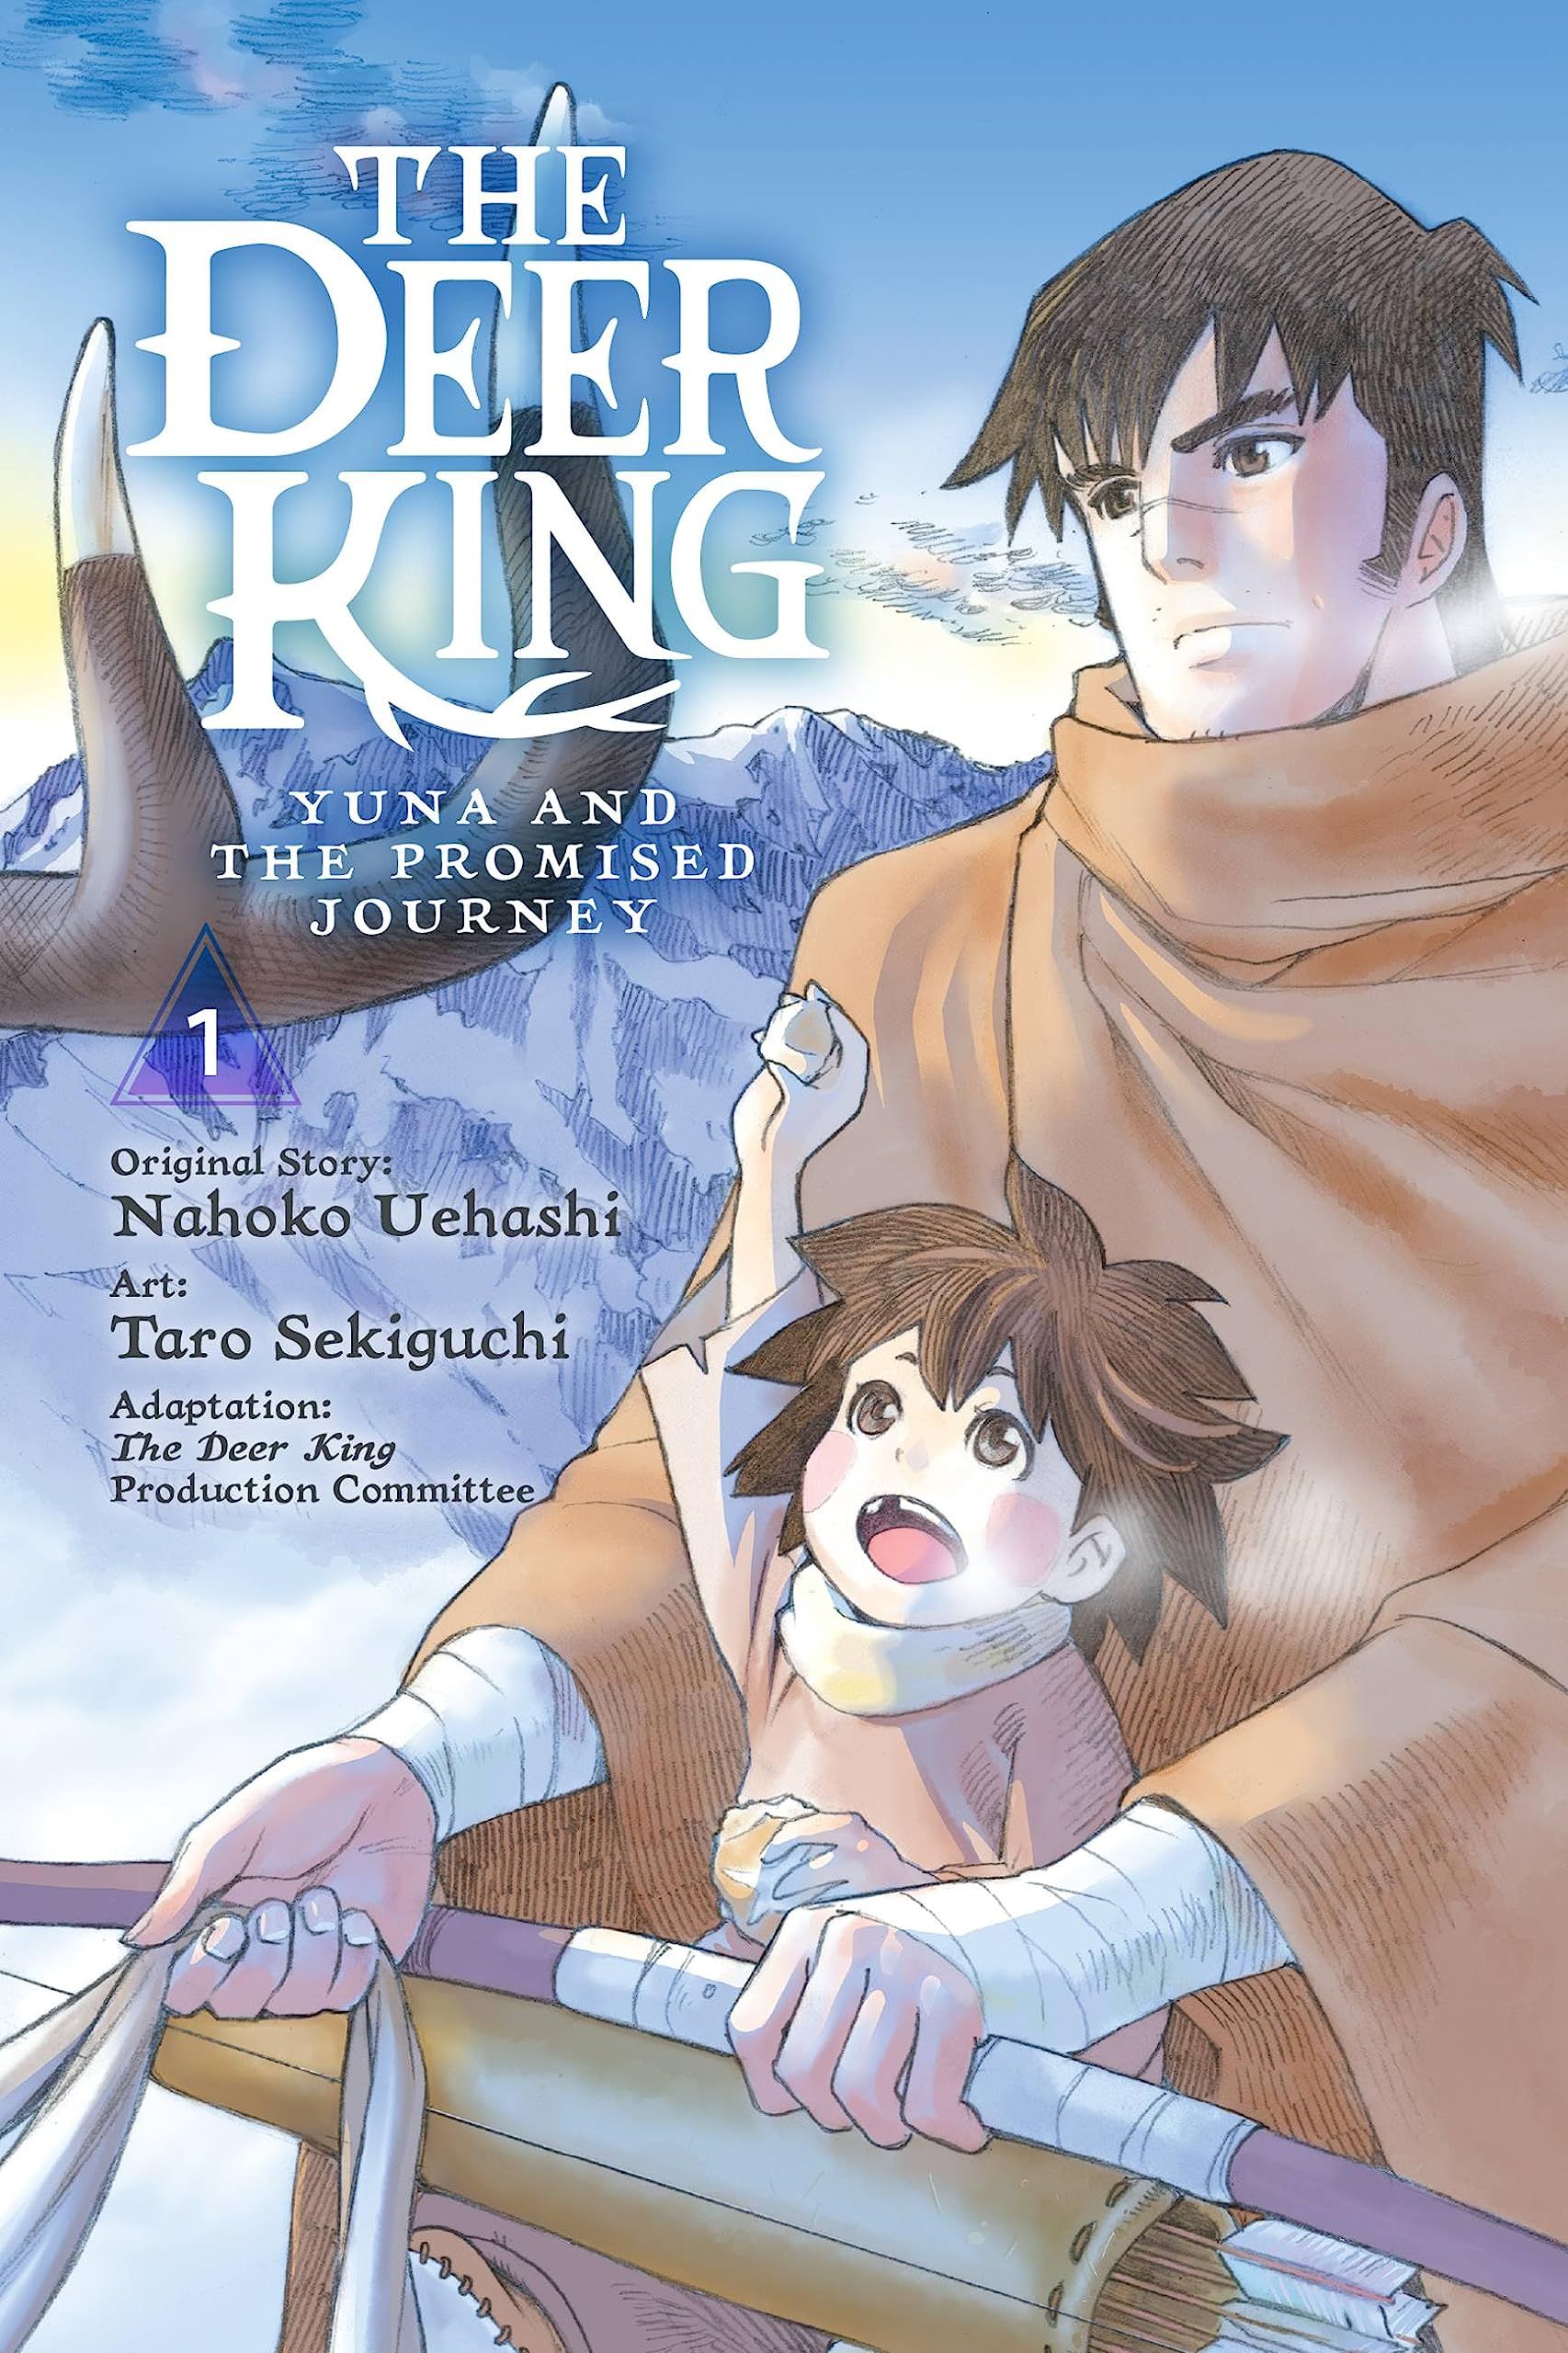 The Deer King by Nahoko Uehashi and Taro Sekiguchi cover